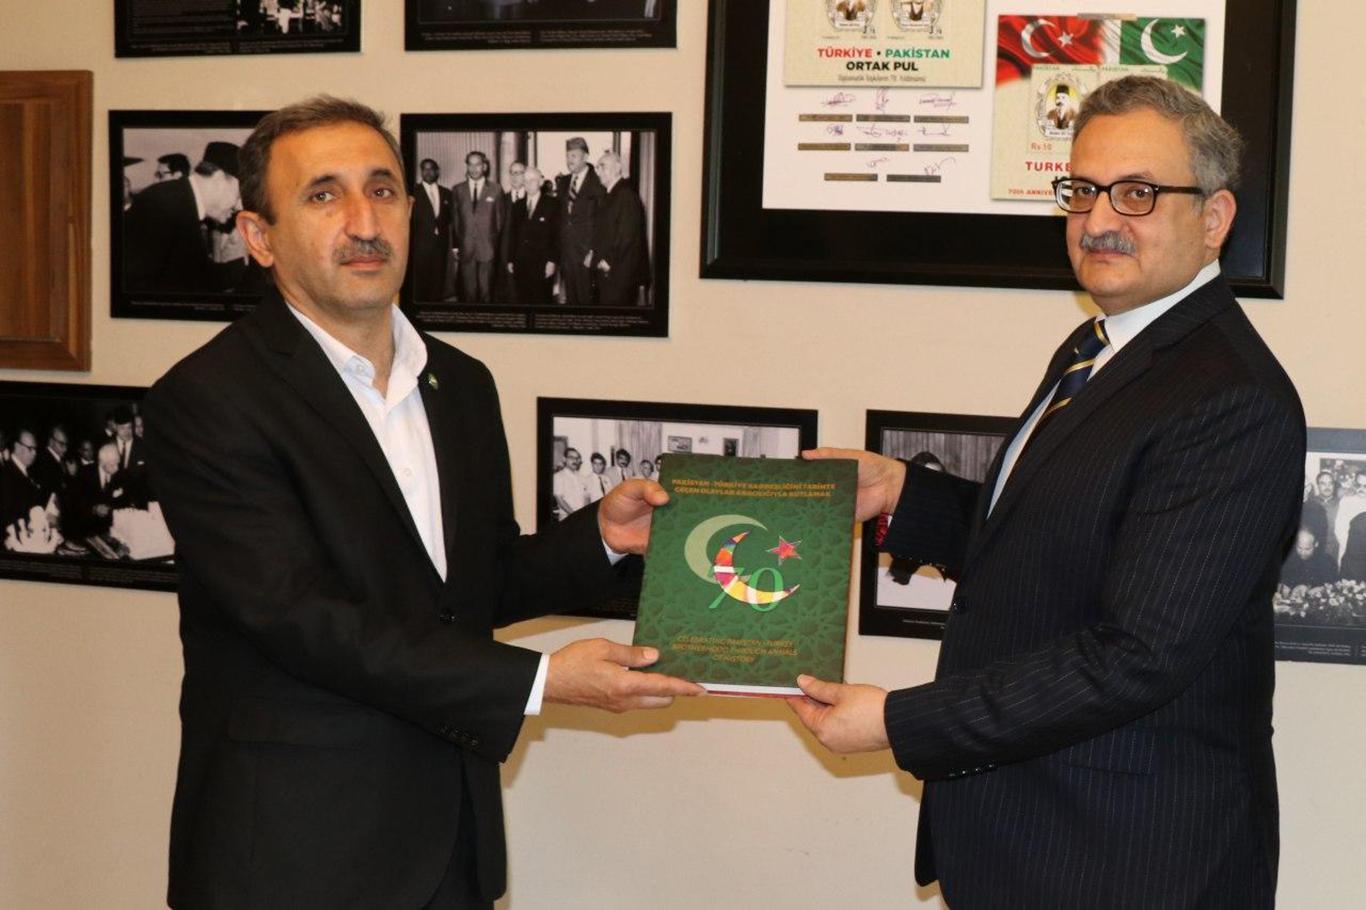 HÜDA PAR pays a visit to Pakistan’s Embassy in Turkey